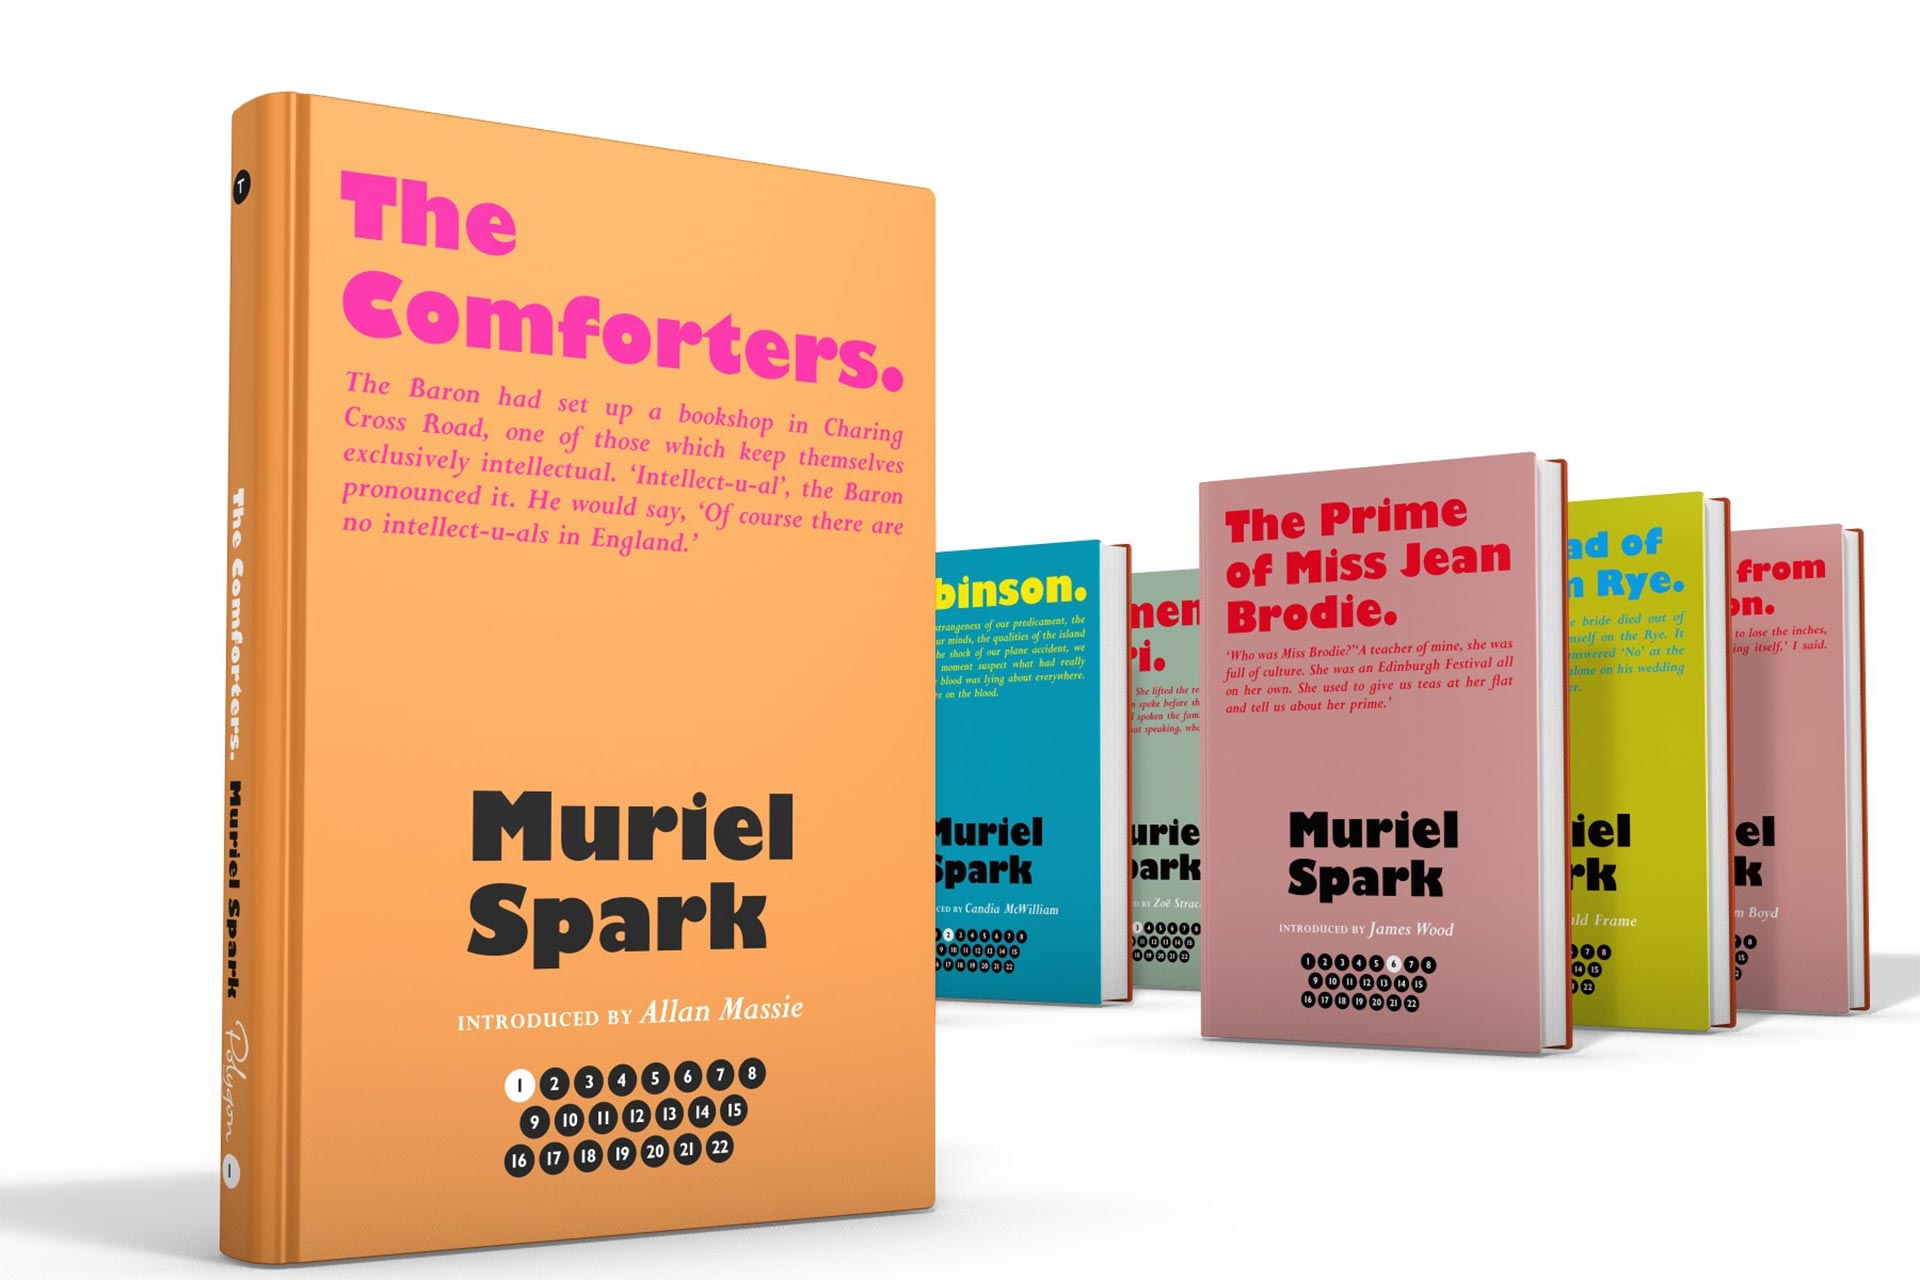 Muriel Spark, the Centenary